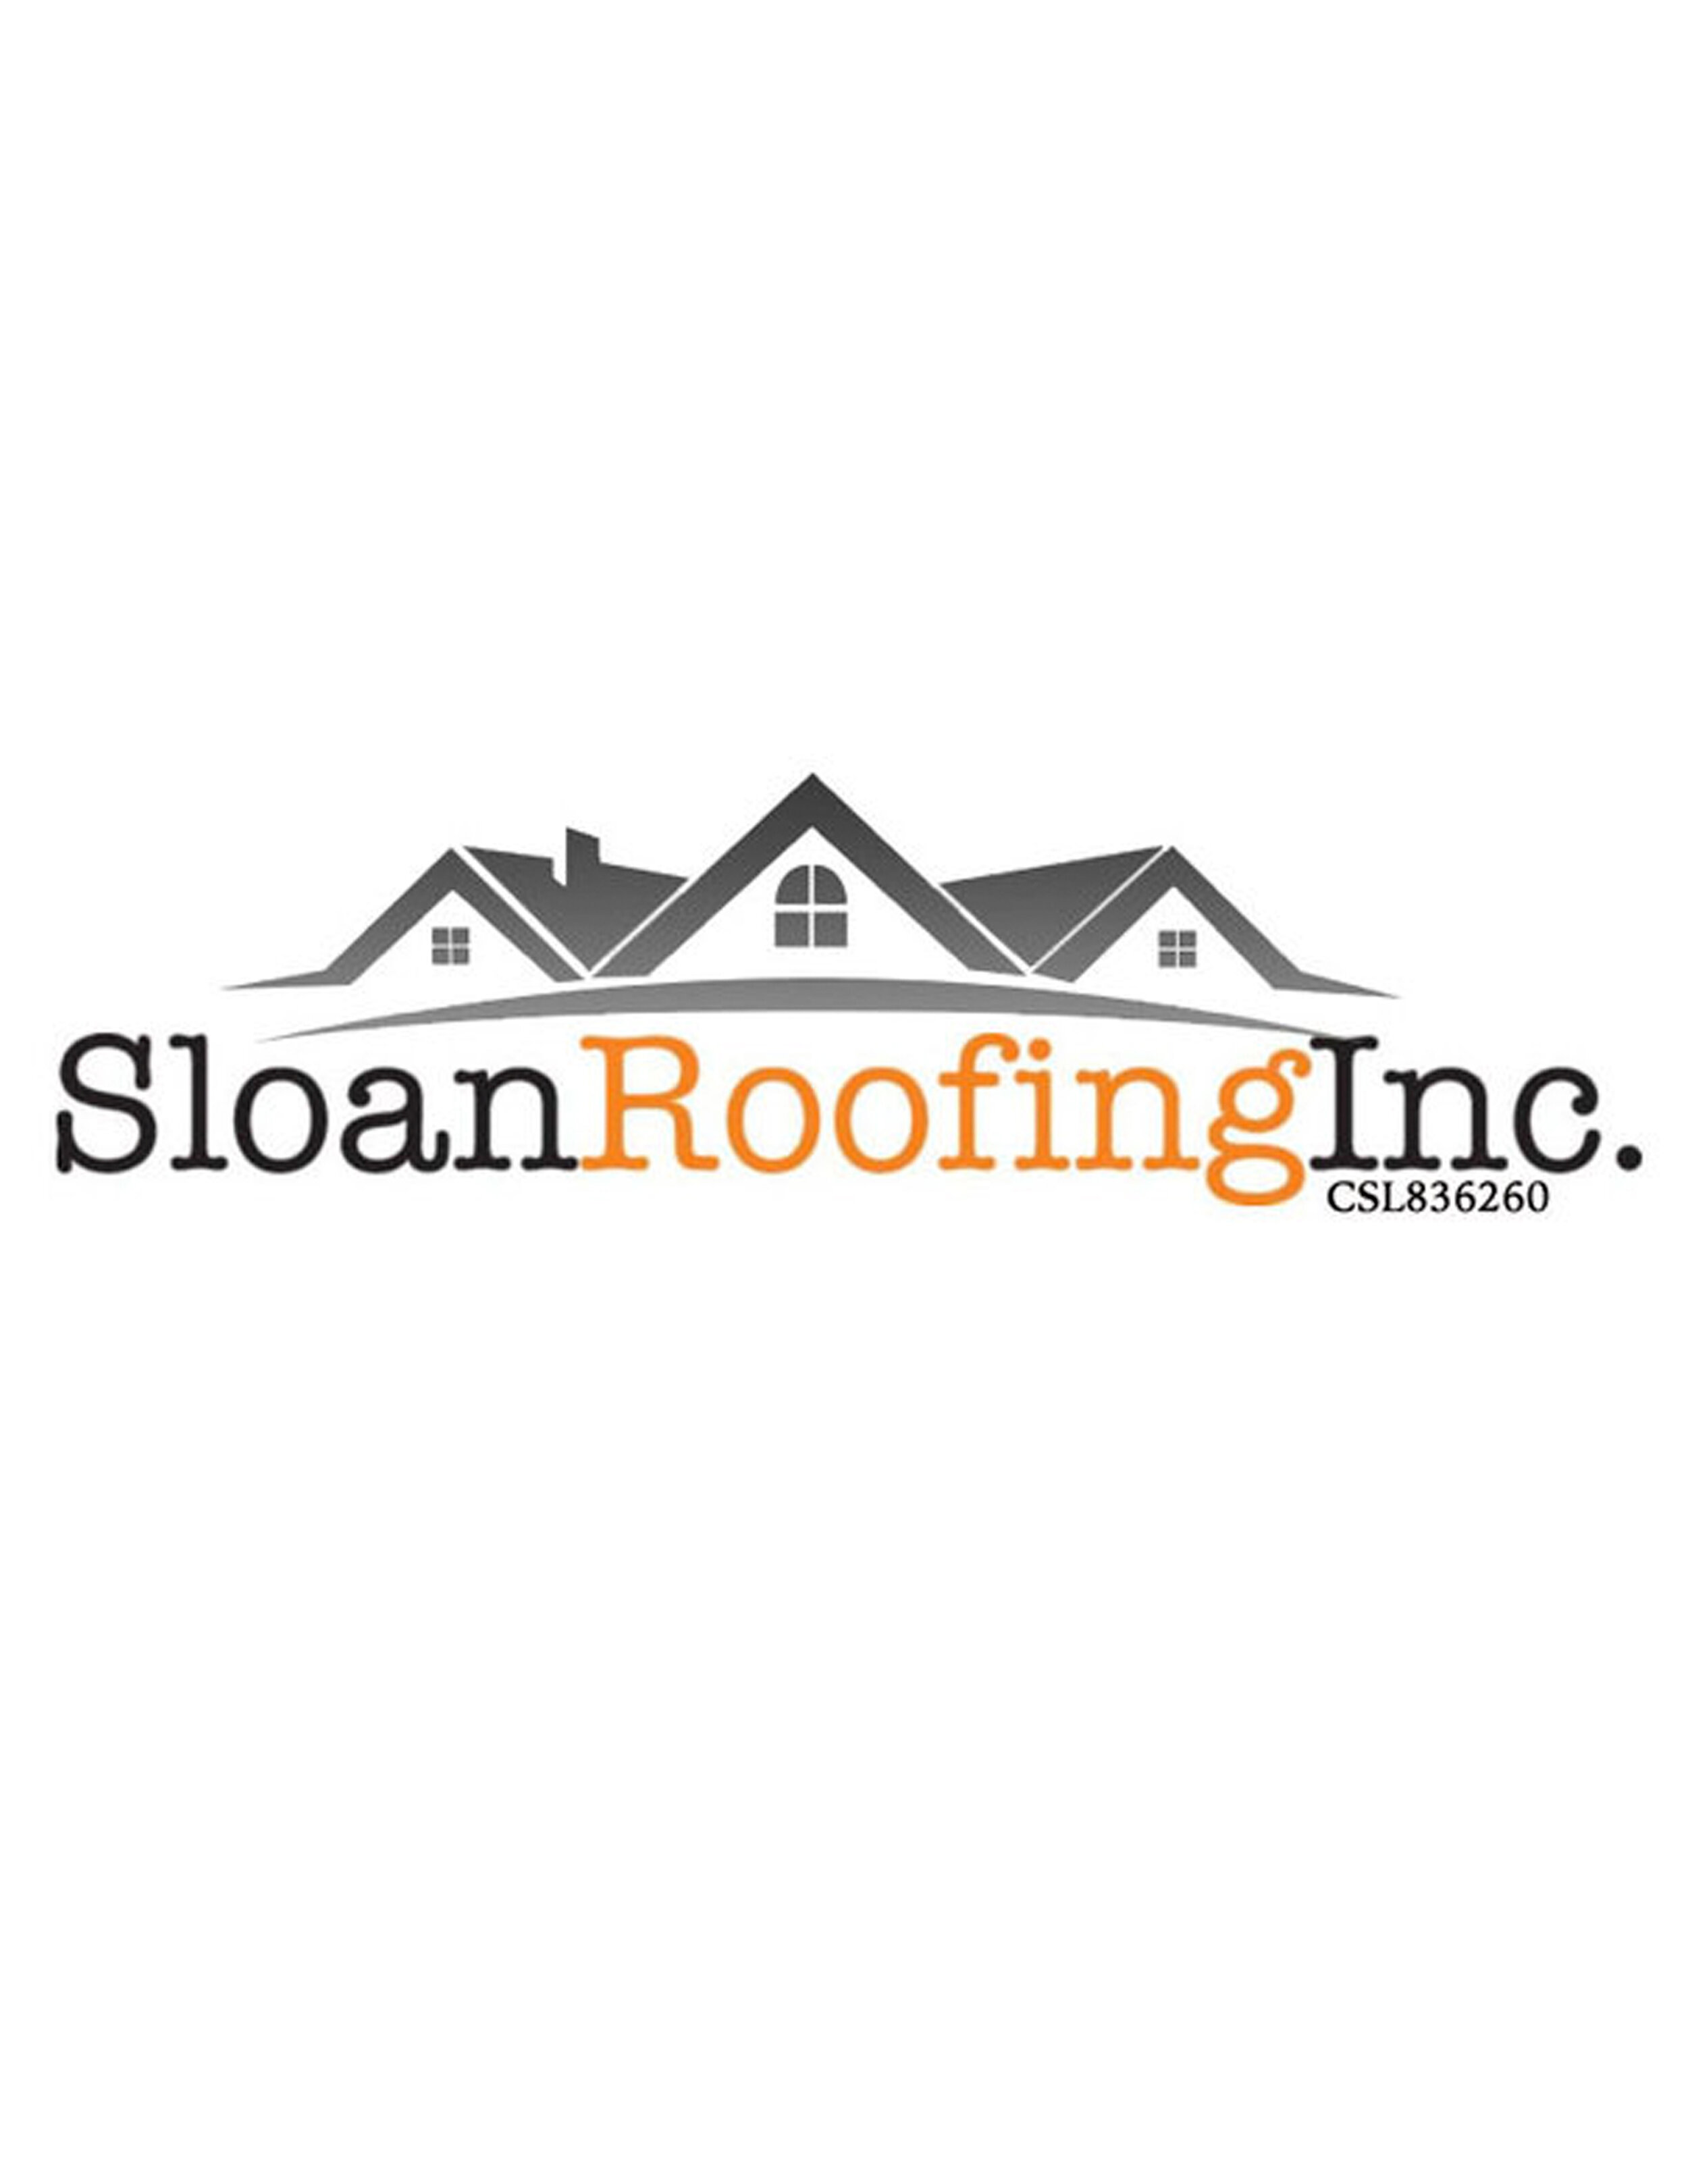 Sloan Roofing Logo.jpg